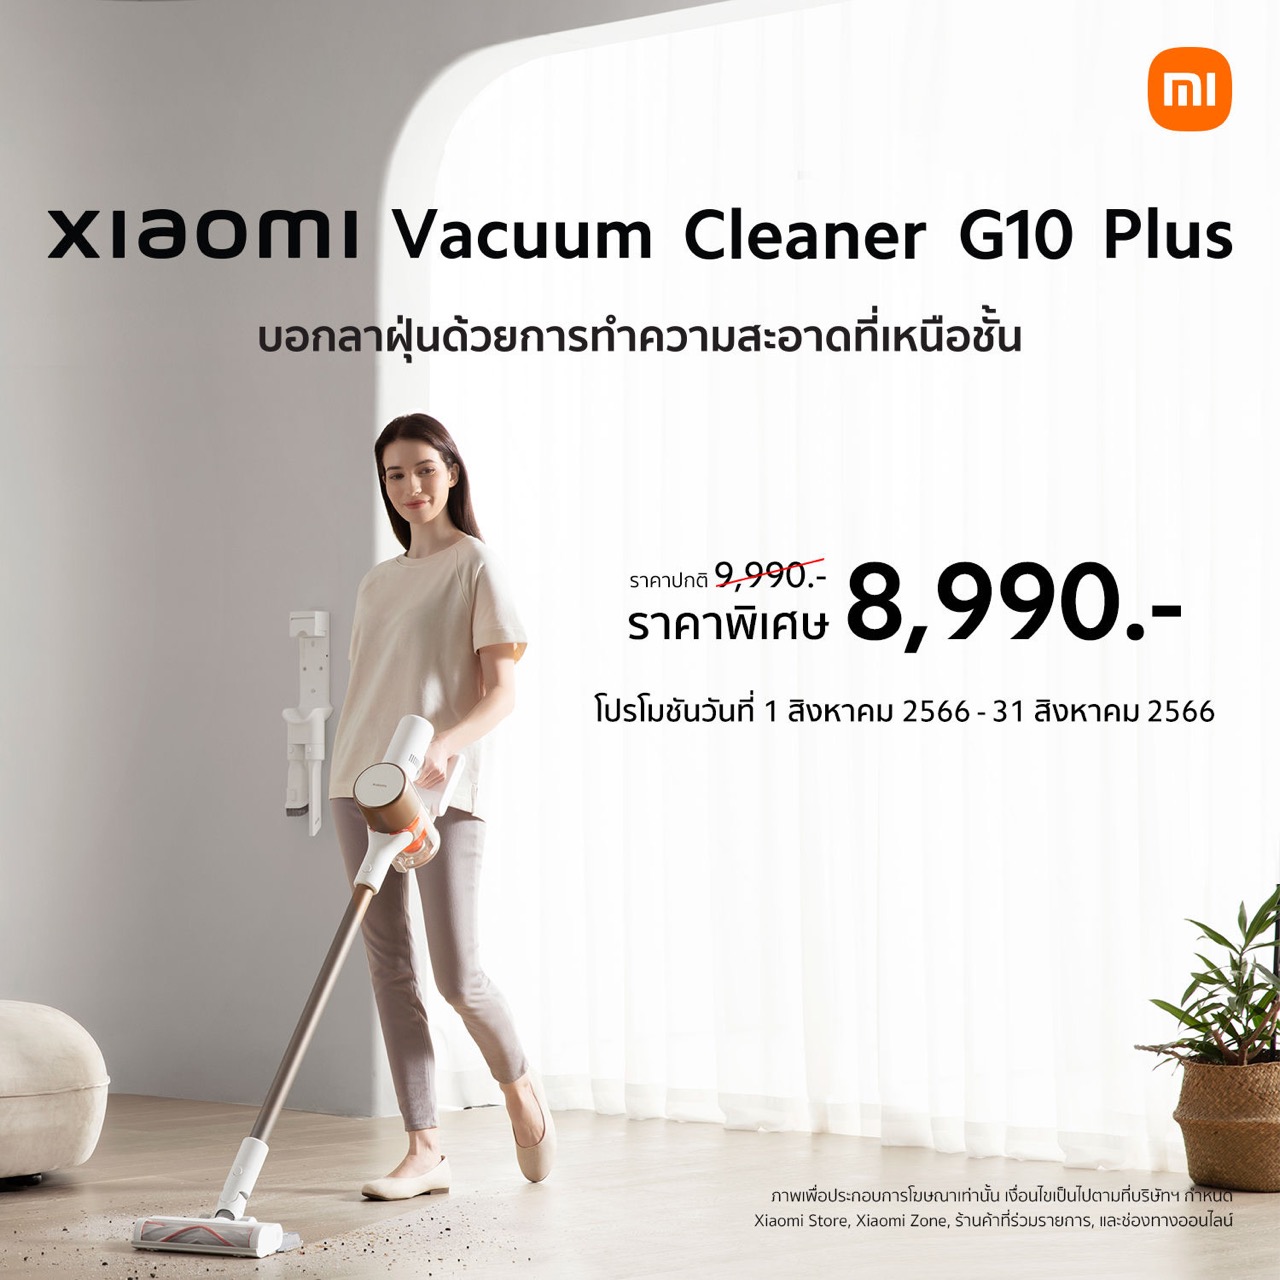 Xiaomi Vacuum Cleaner G10 Plus_Sales Information Large